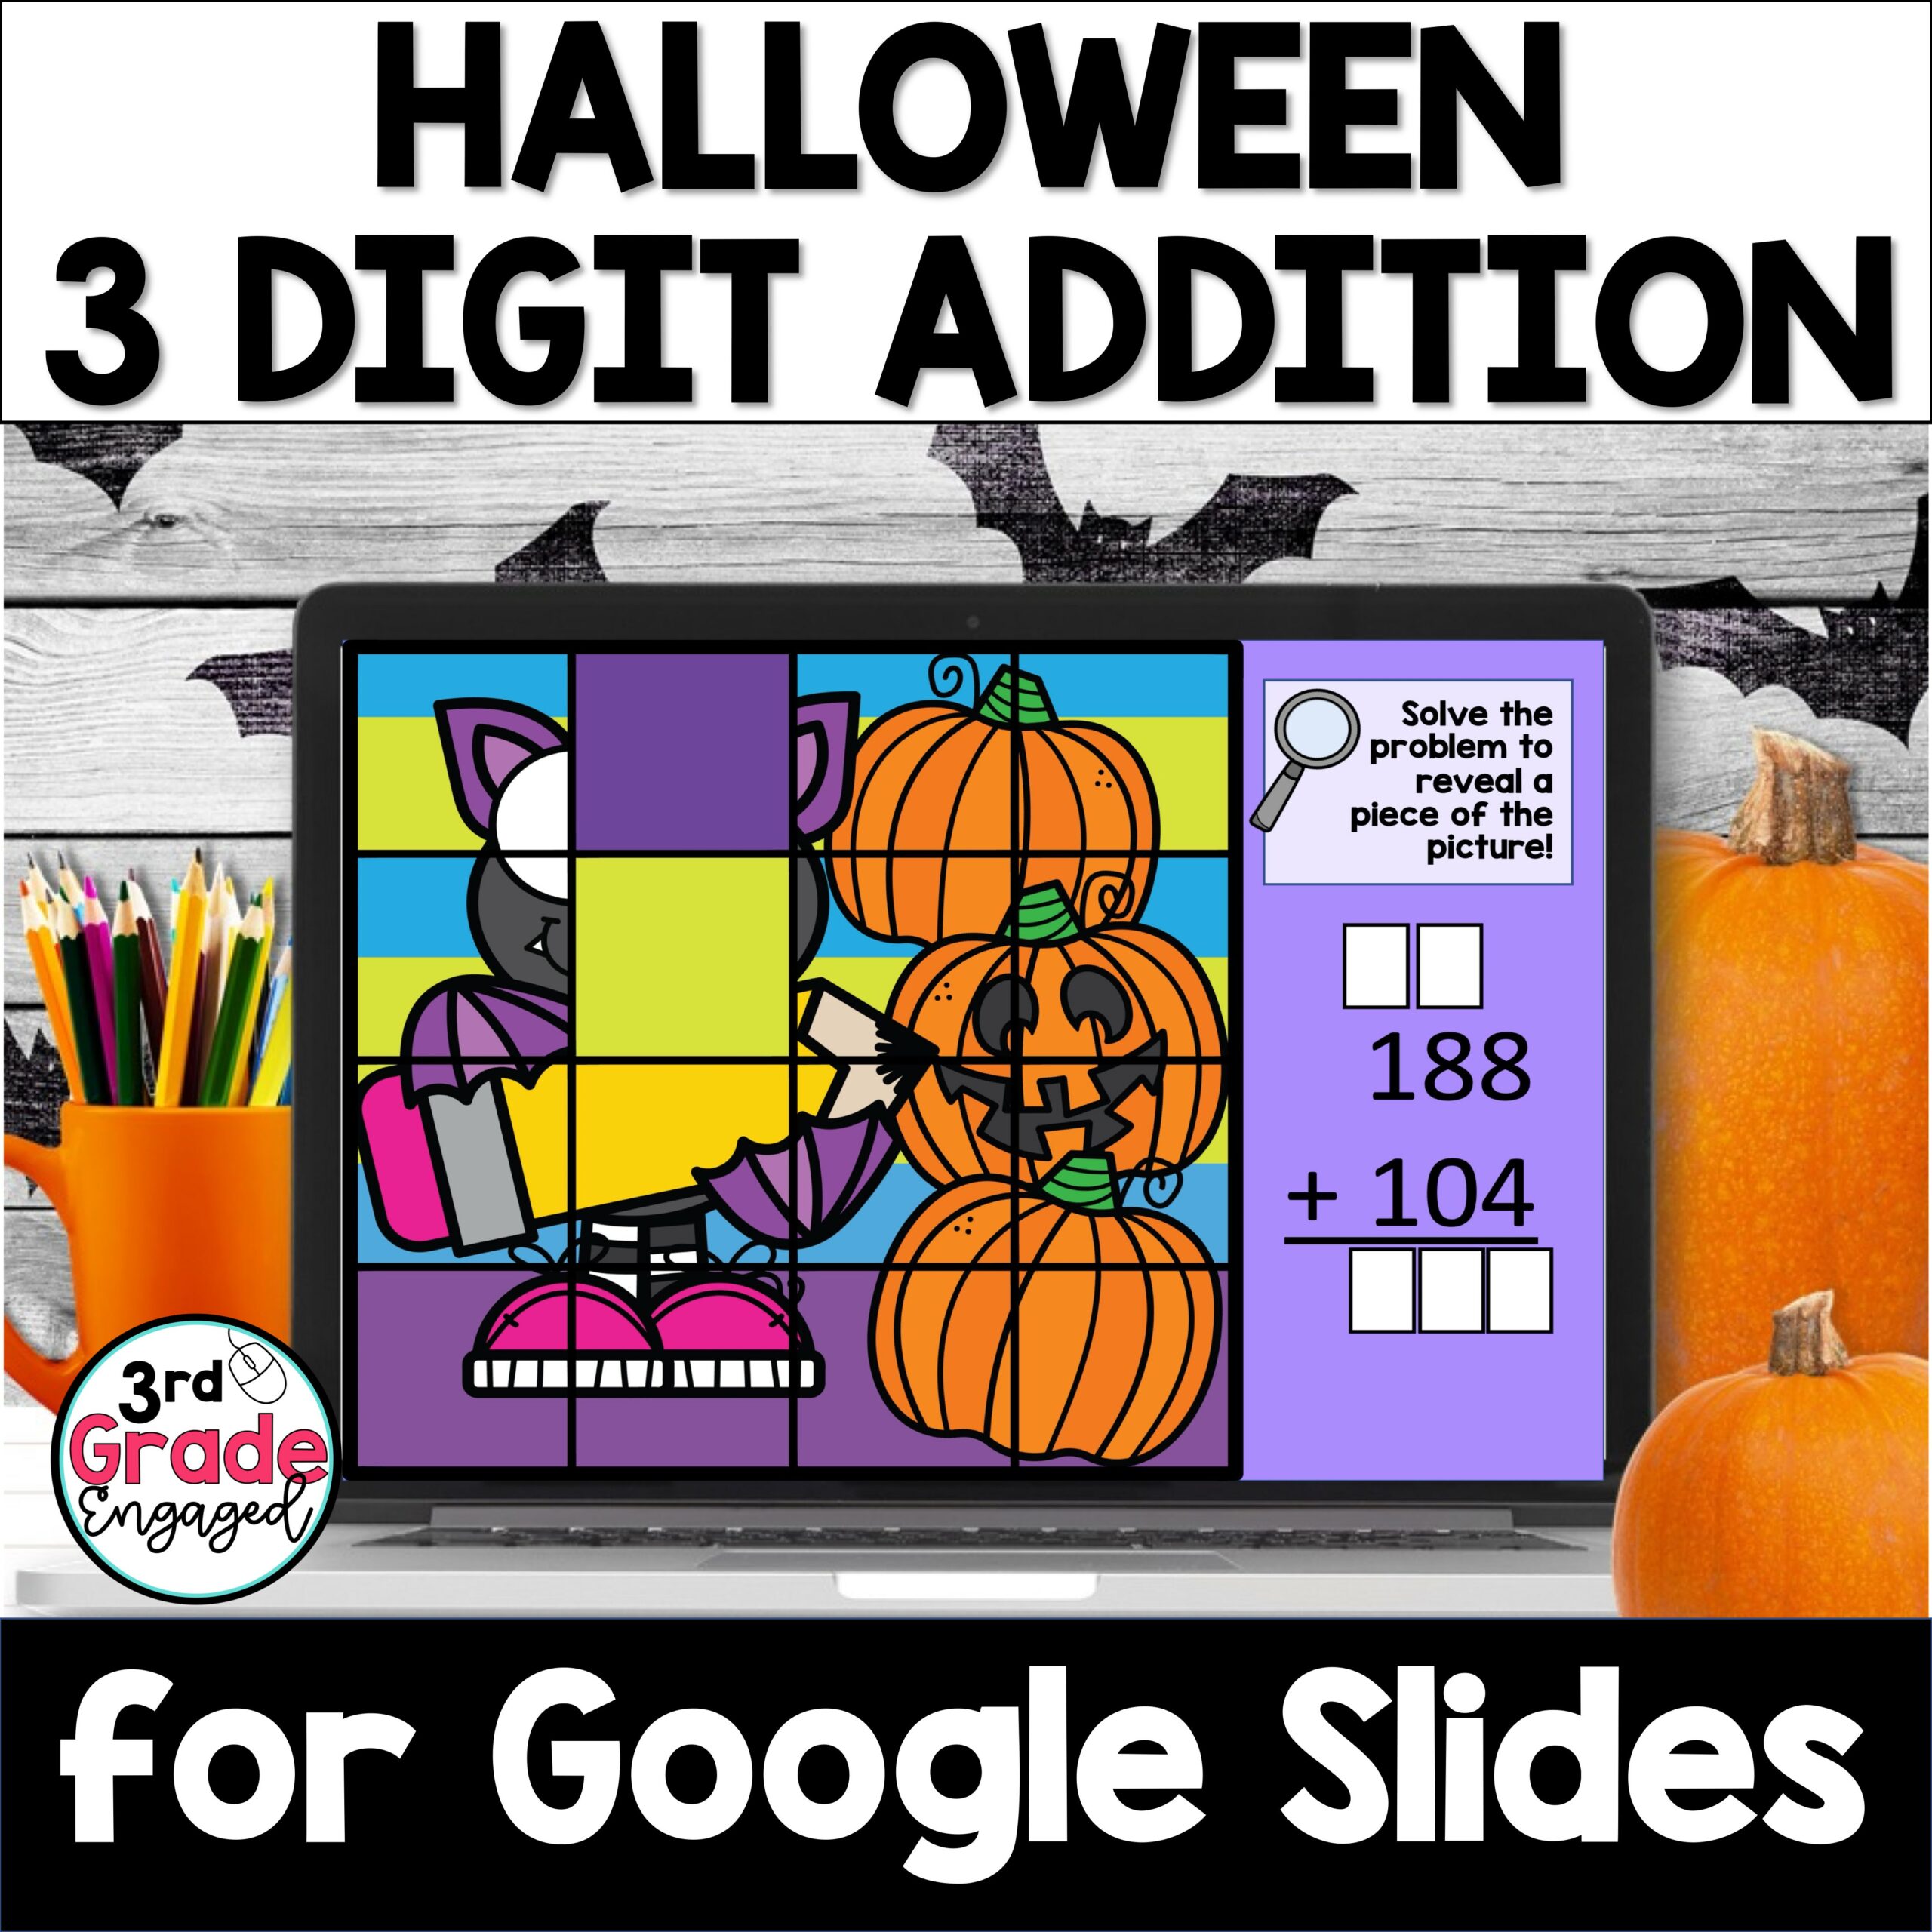 3 Digit Addition Halloween Math Activity for Google Slides™